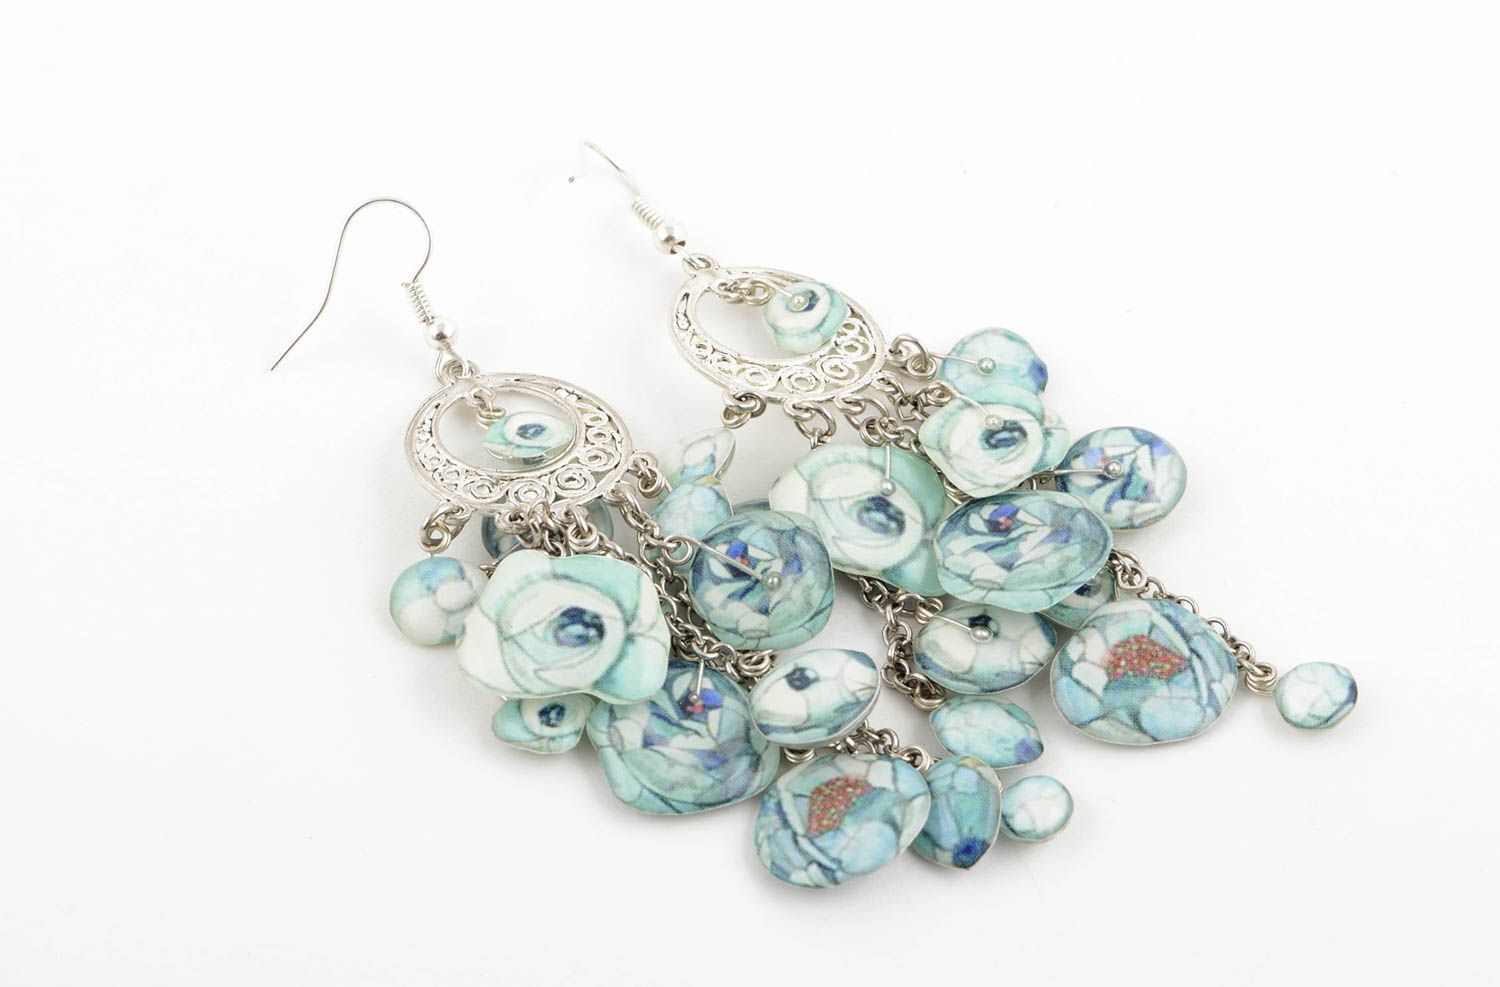 Fashion earrings designer jewelry handcrafted jewelry earrings for women photo 2